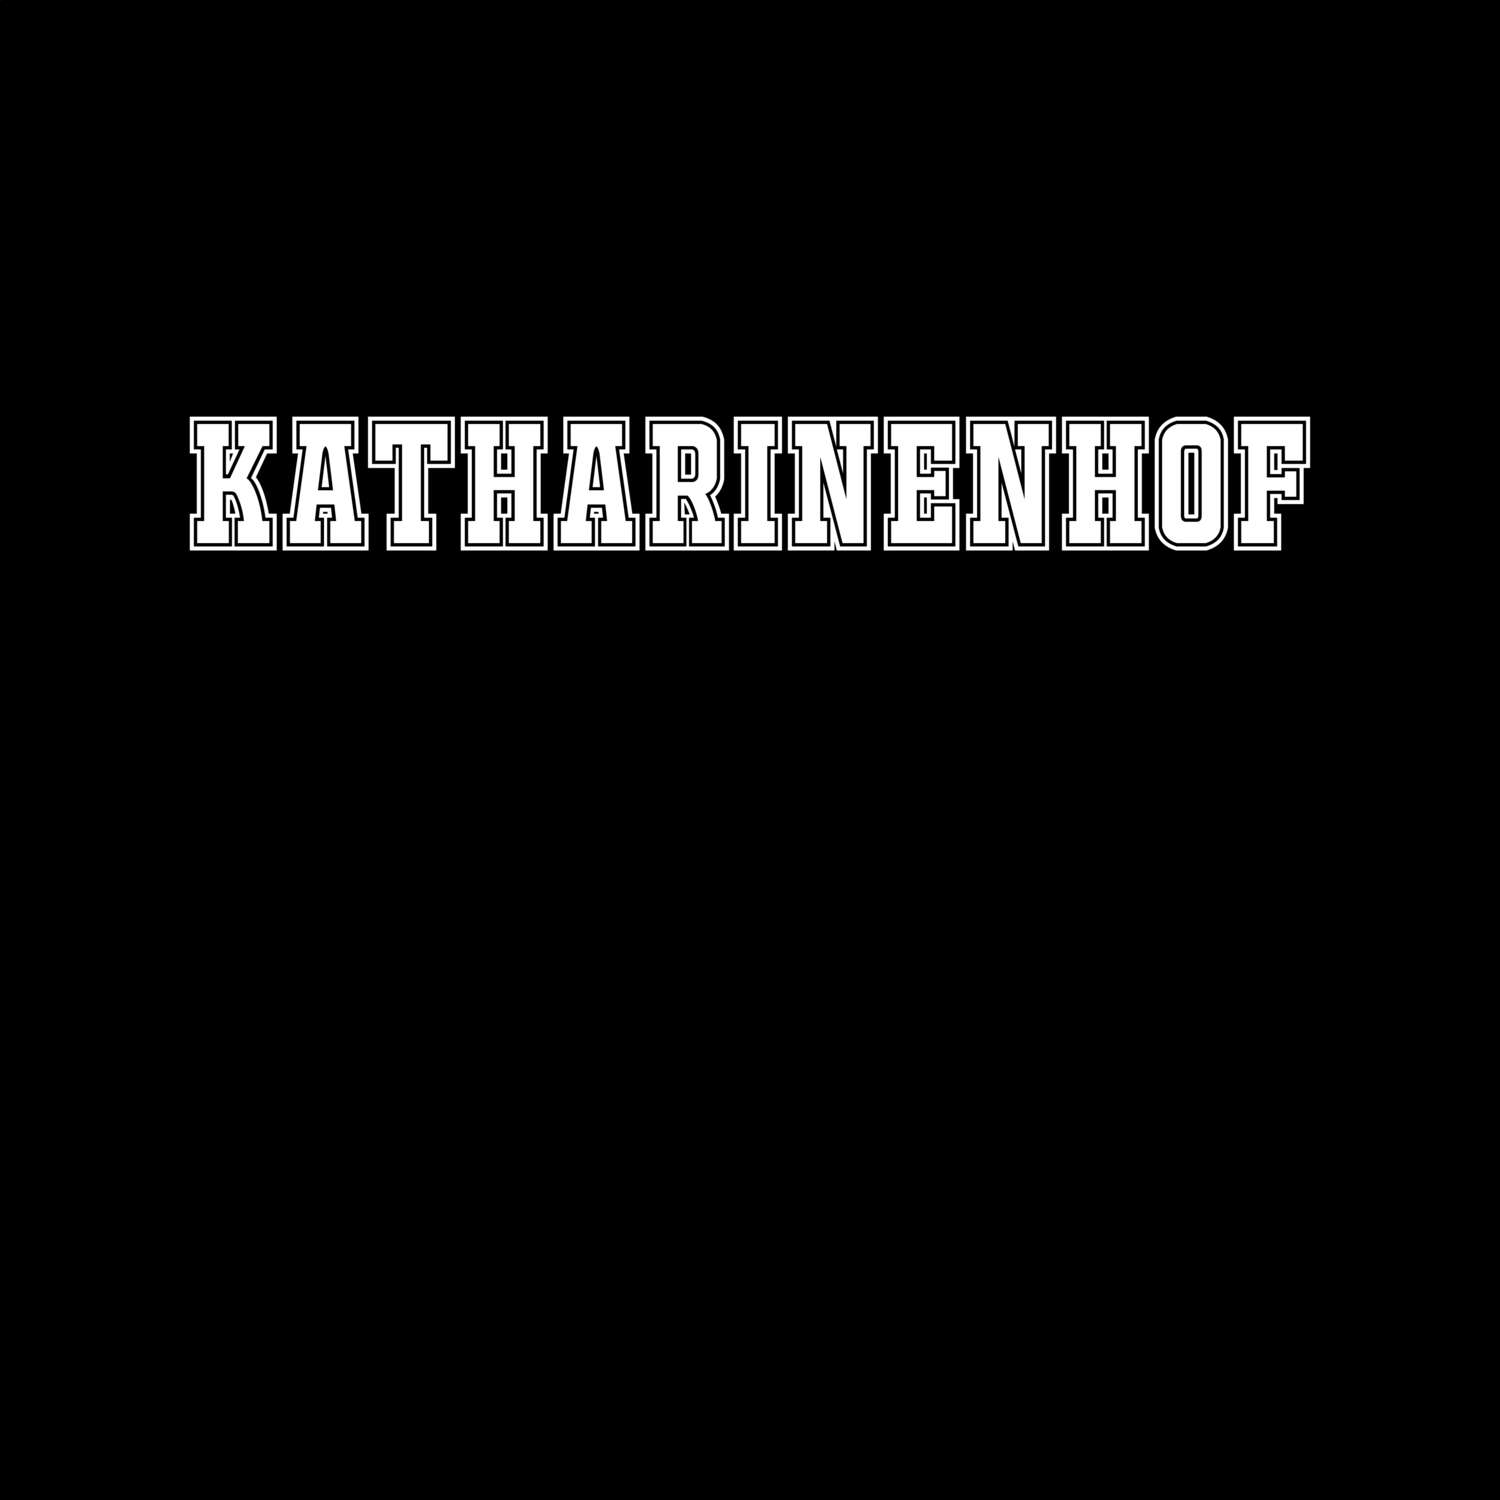 Katharinenhof T-Shirt »Classic«